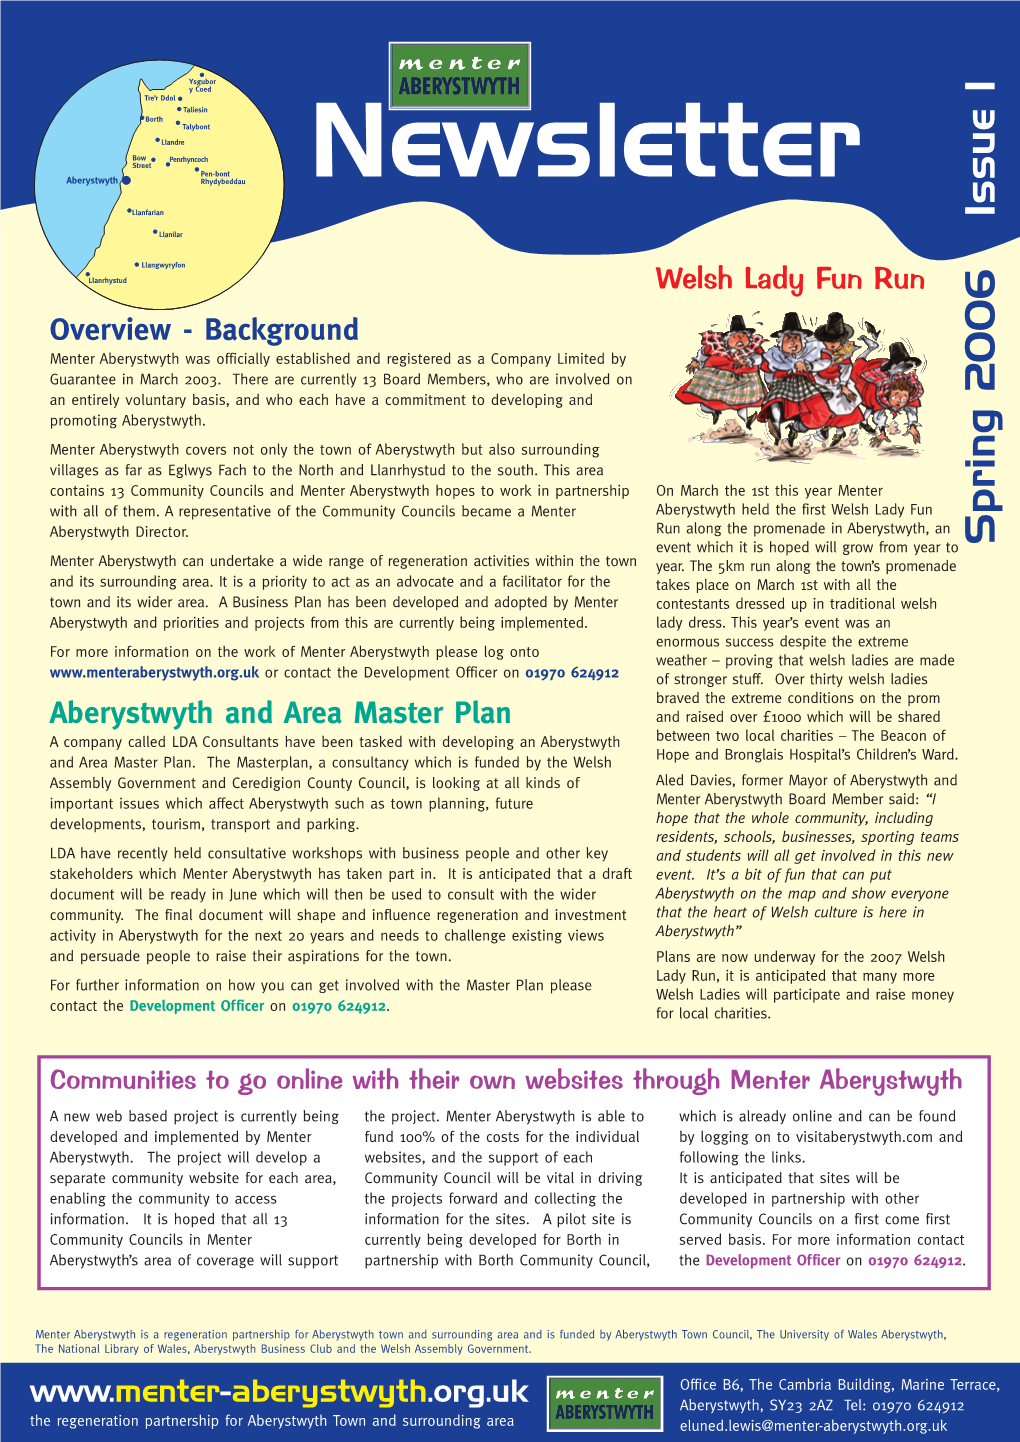 Menter Aberystwyth Newsletter 26/5/06 2:31 Pm Page 1